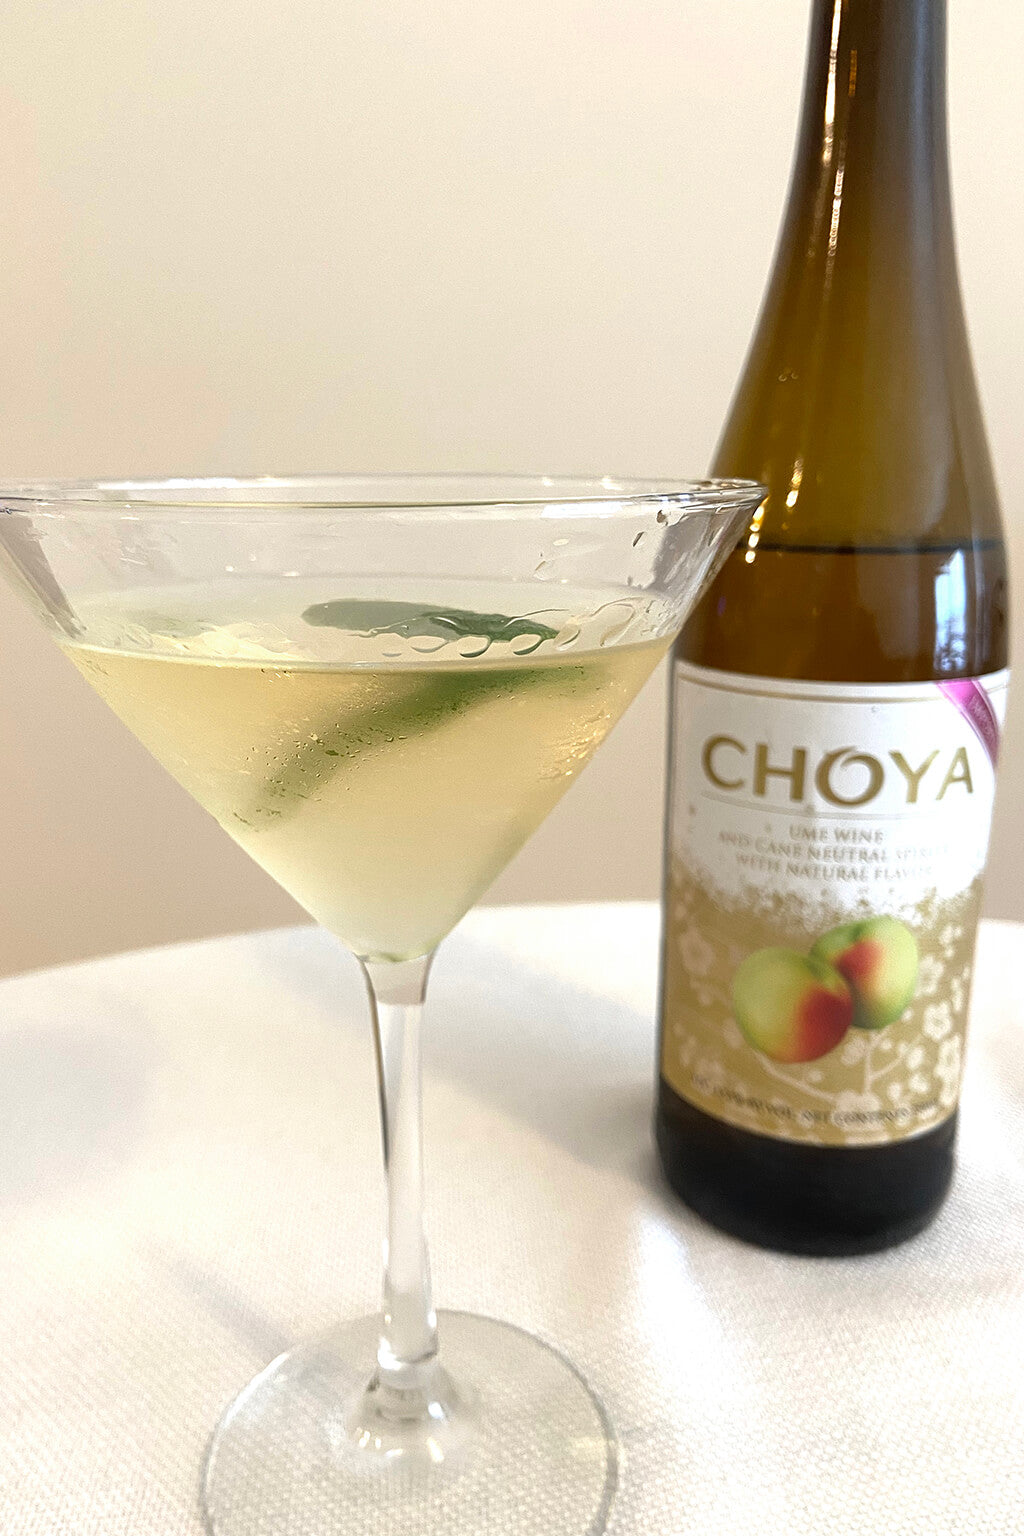 Plum wine martini with Choya “Plum Wine”
